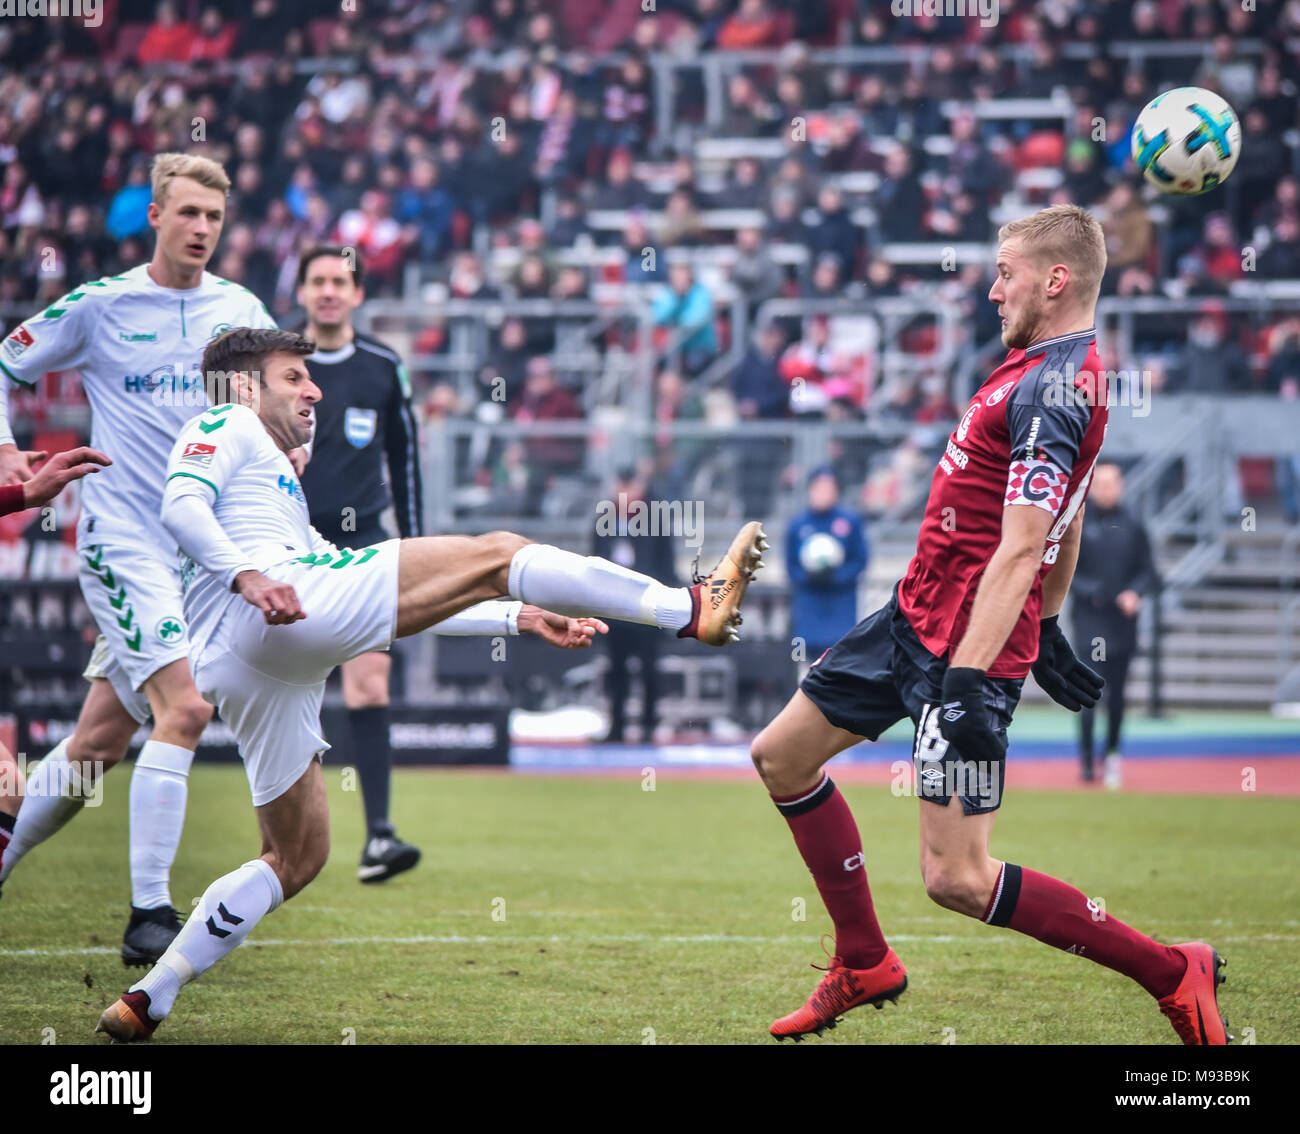 Germania, Nuernberg, Max-Morlock-Stadion, 03 marzo 2018 - 2.Bundesliga - 1.FC Nürnberg vs. SpVgg Greuther Fürth - 264° Franken Derby ! Foto Stock